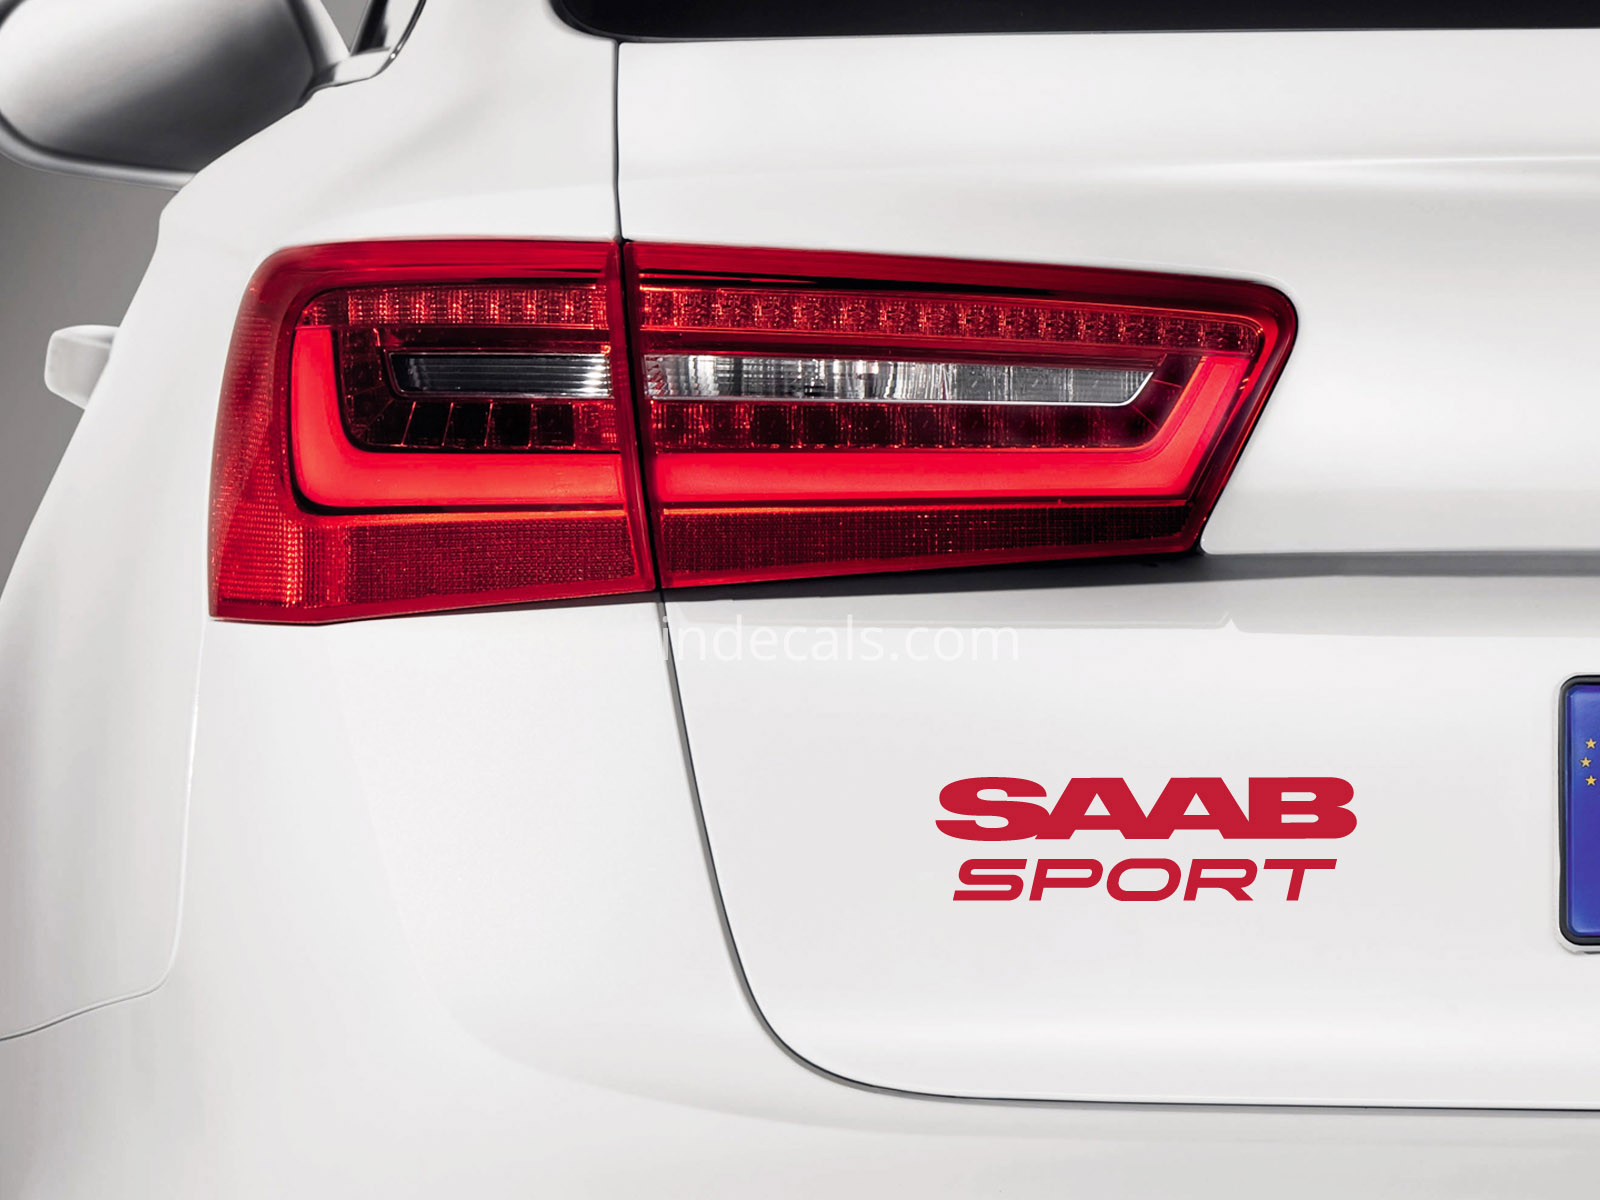 1 x Saab Sports Sticker for Trunk - Red